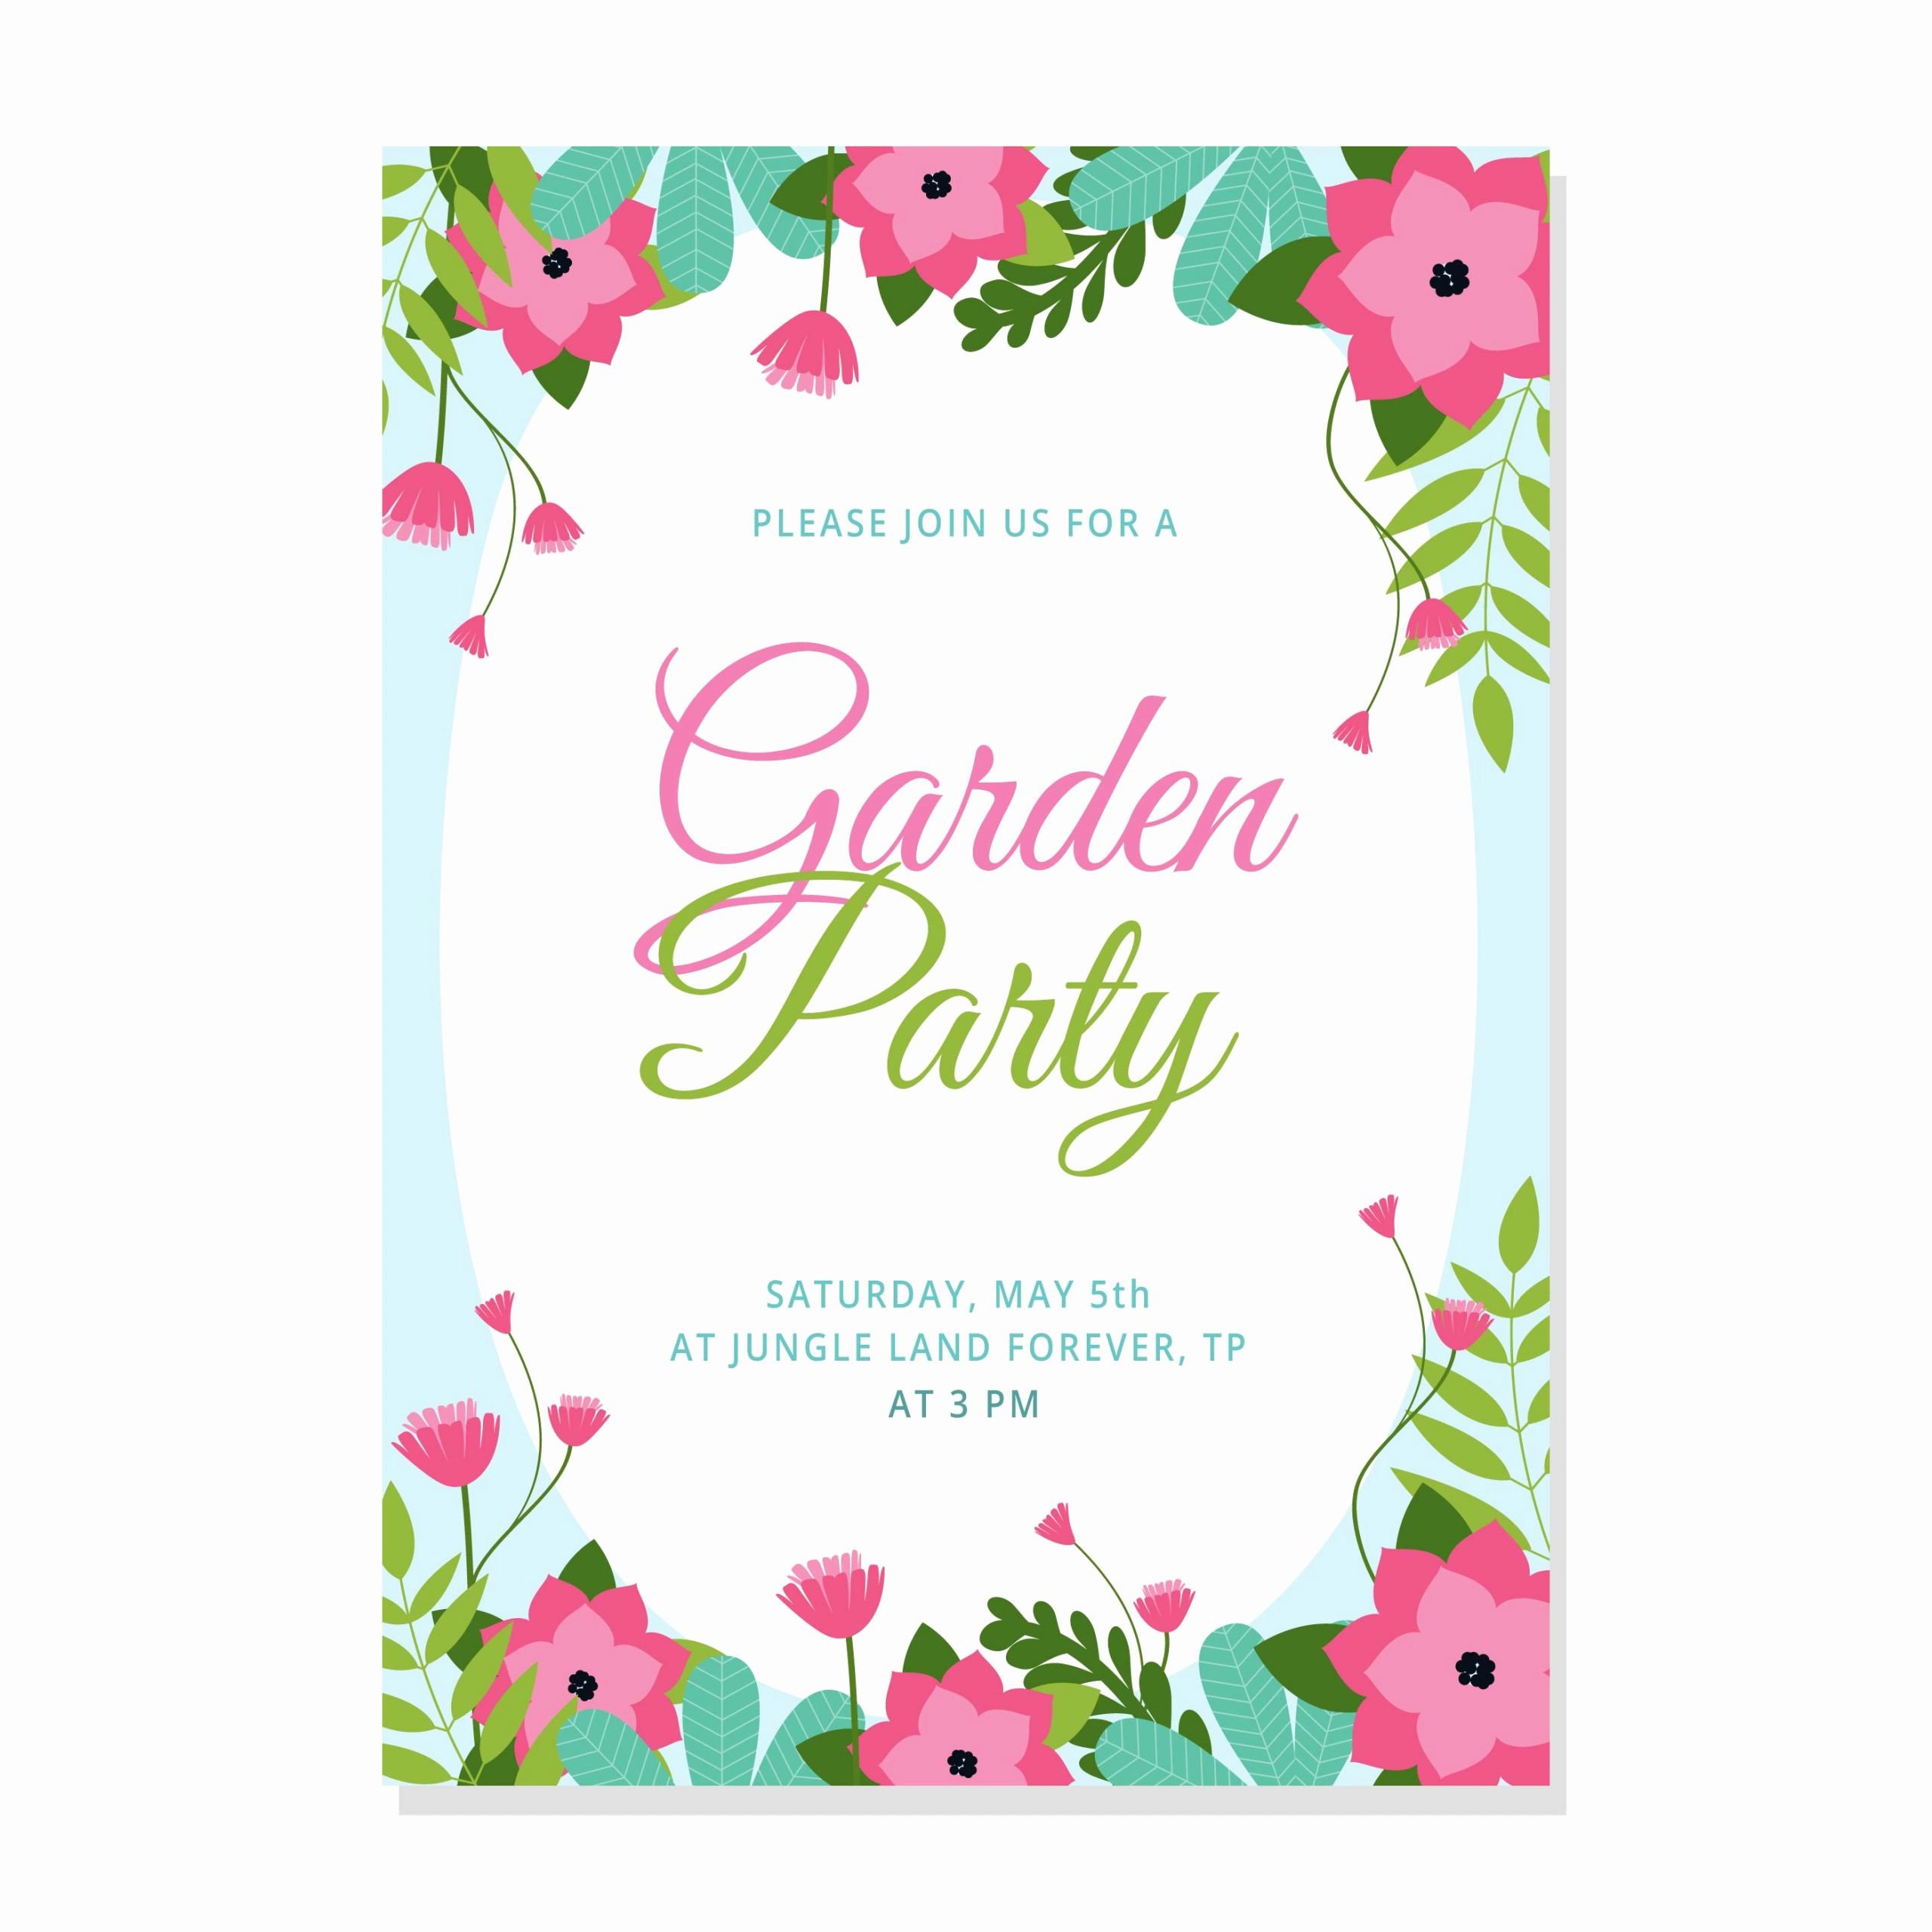 Garden Party Invitation Template New Garden Party Invitation Download Free Vectors Clipart